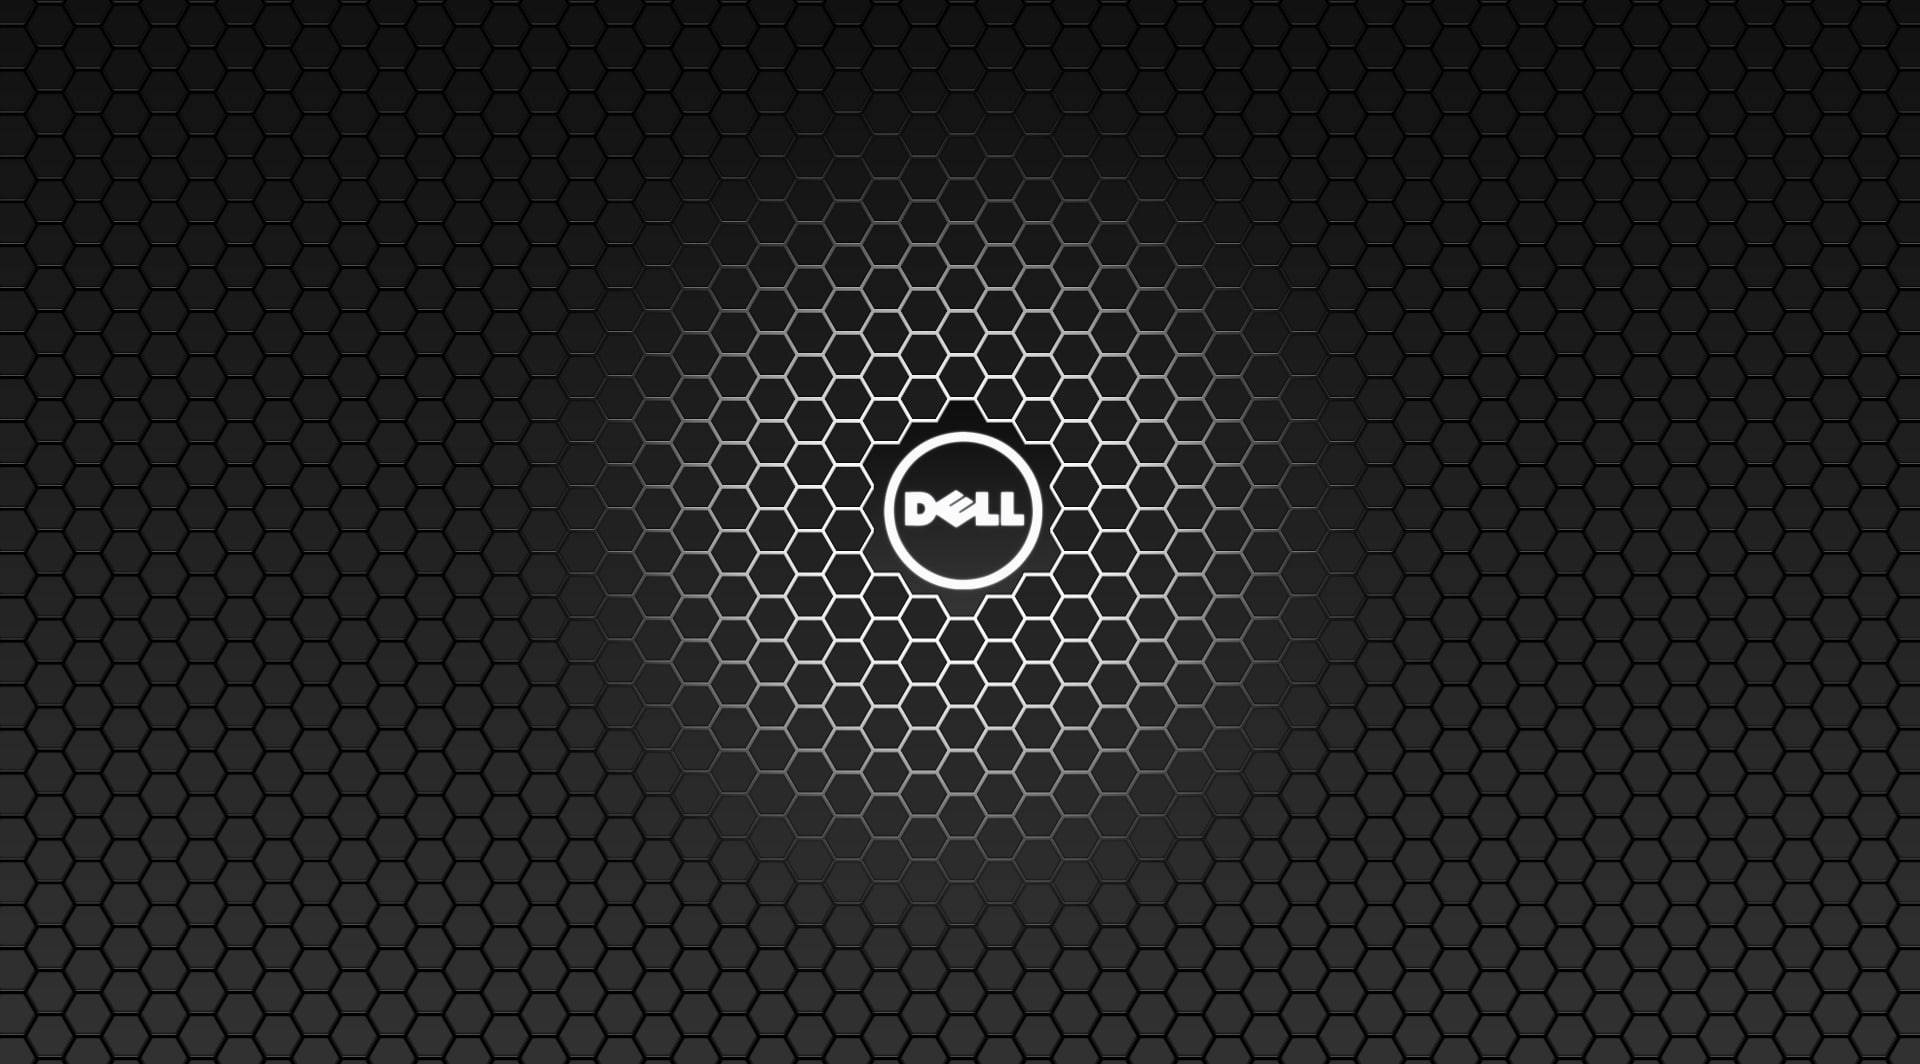 Hexagonal Mesh Dell Laptop Wallpaper